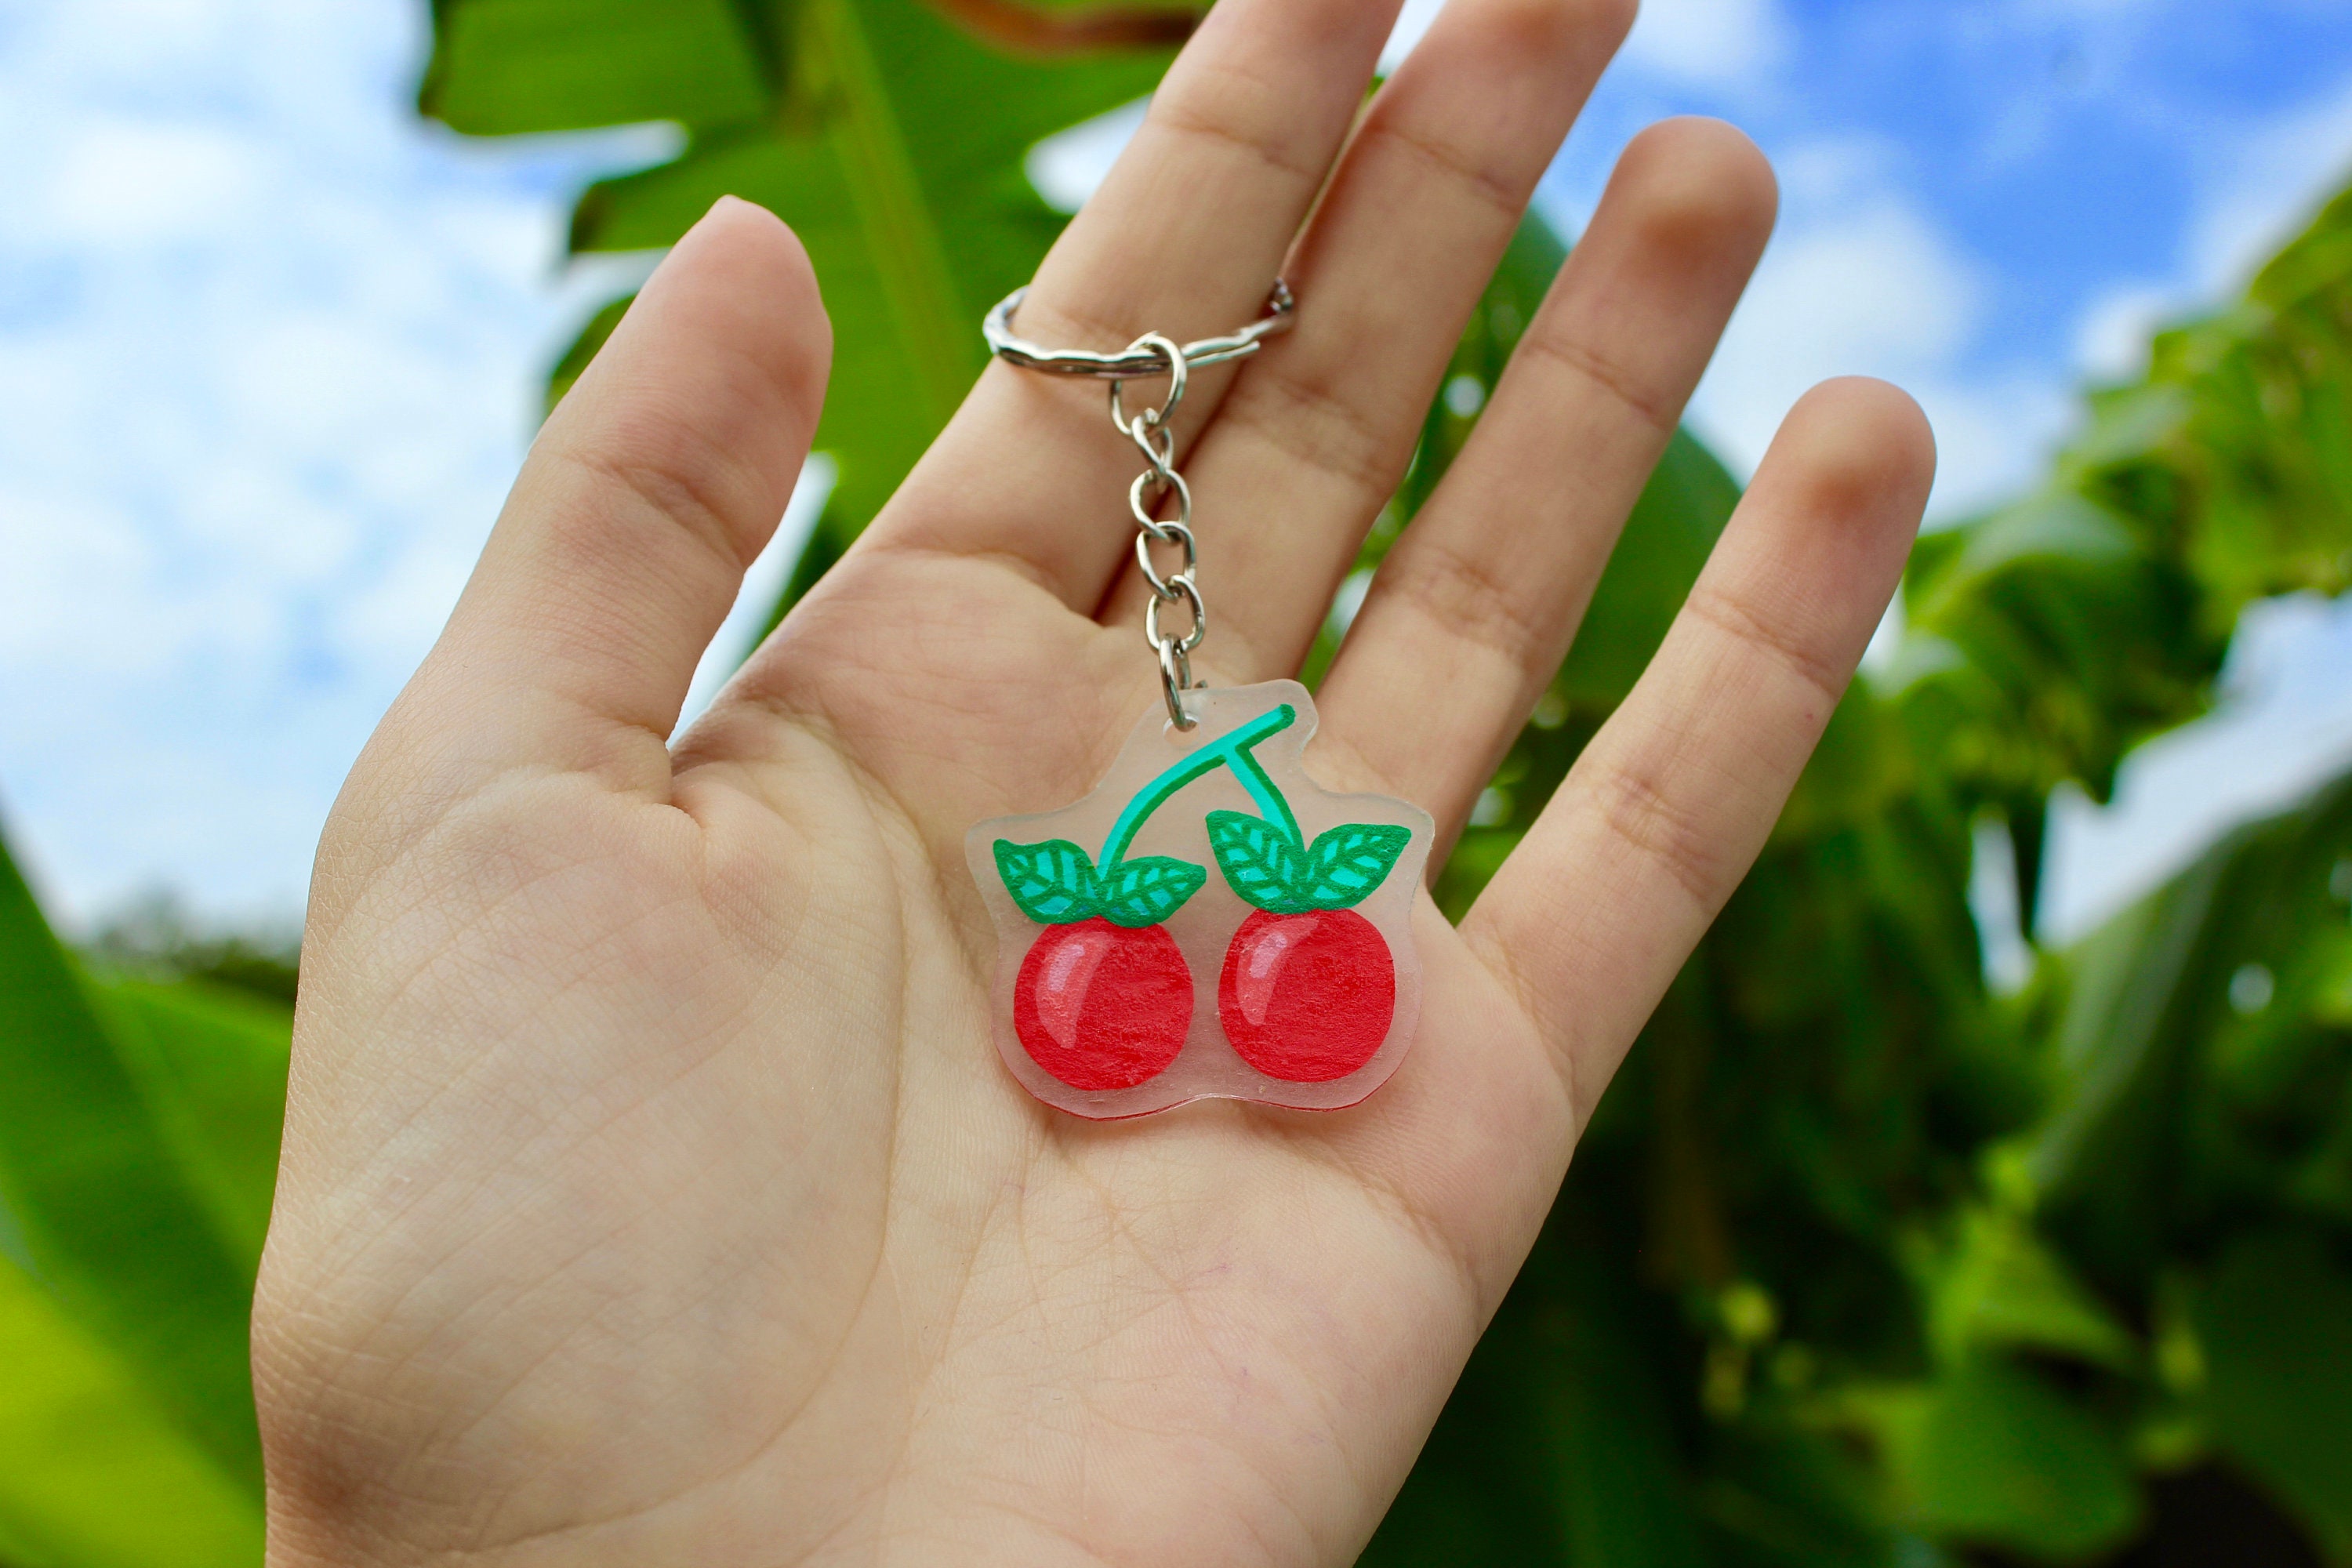 Cherry Keychain